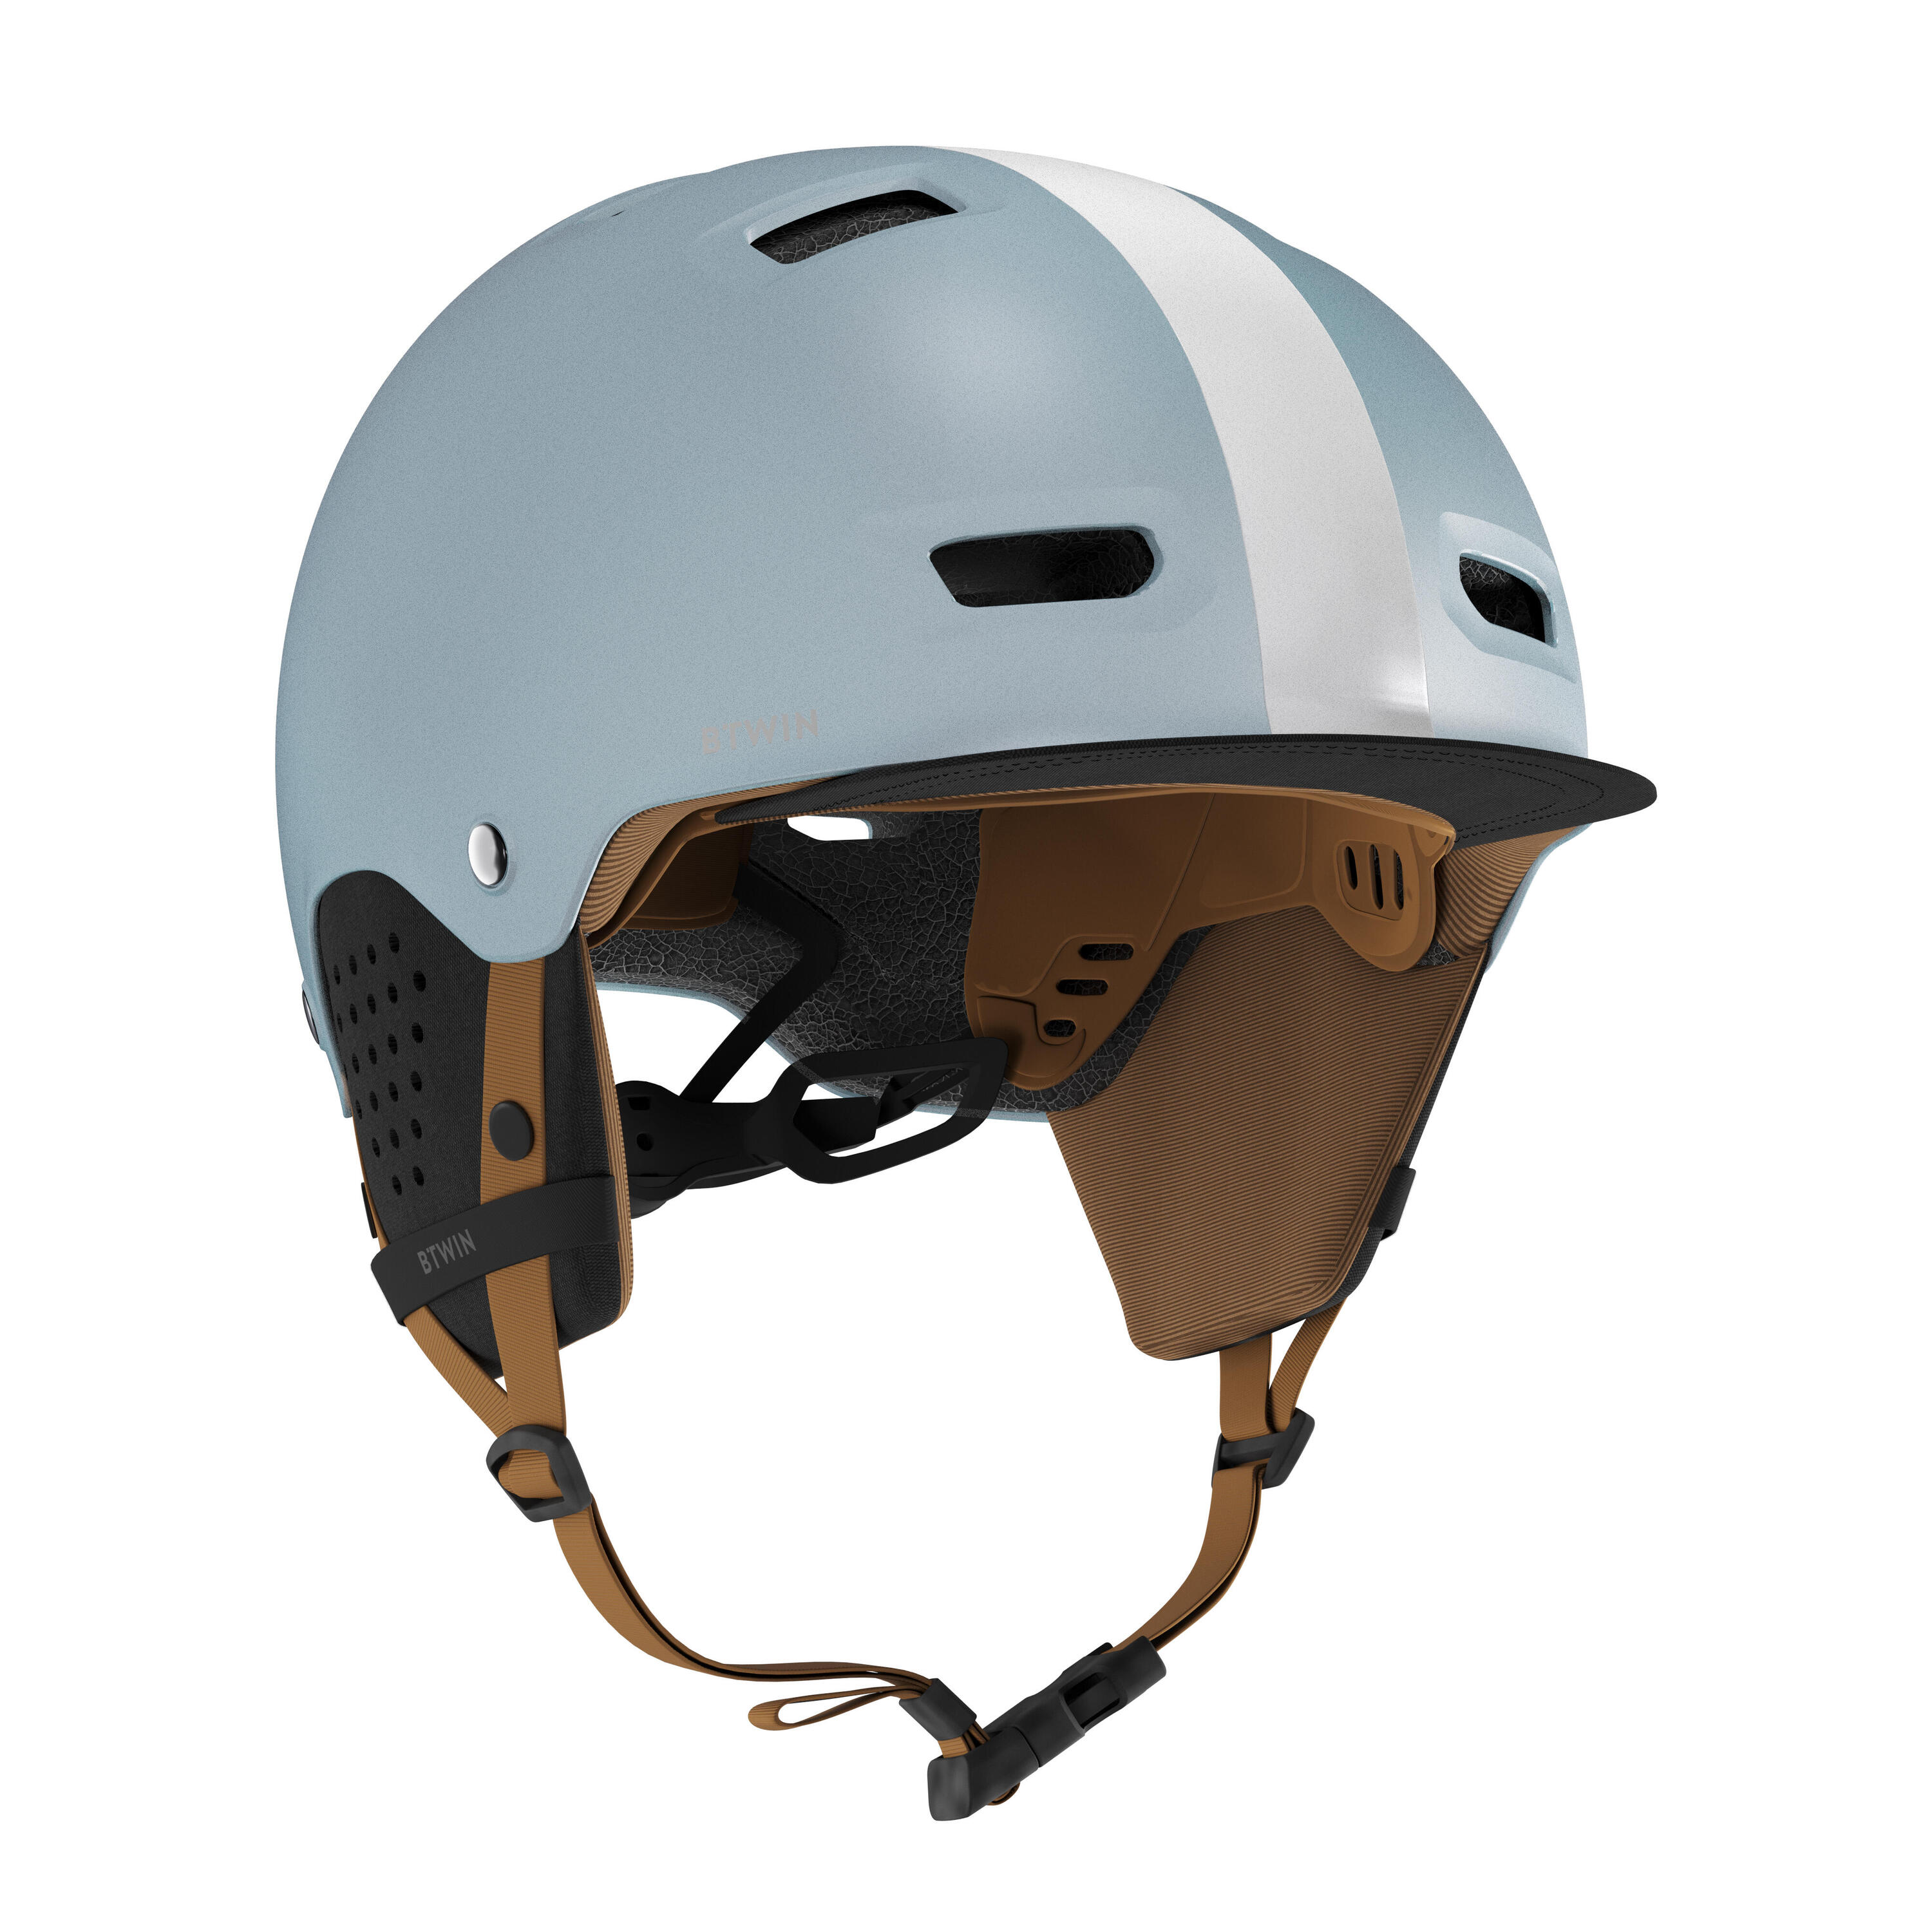 City Cycling Bowl Helmet 540 - Blue/Reflective 2/11